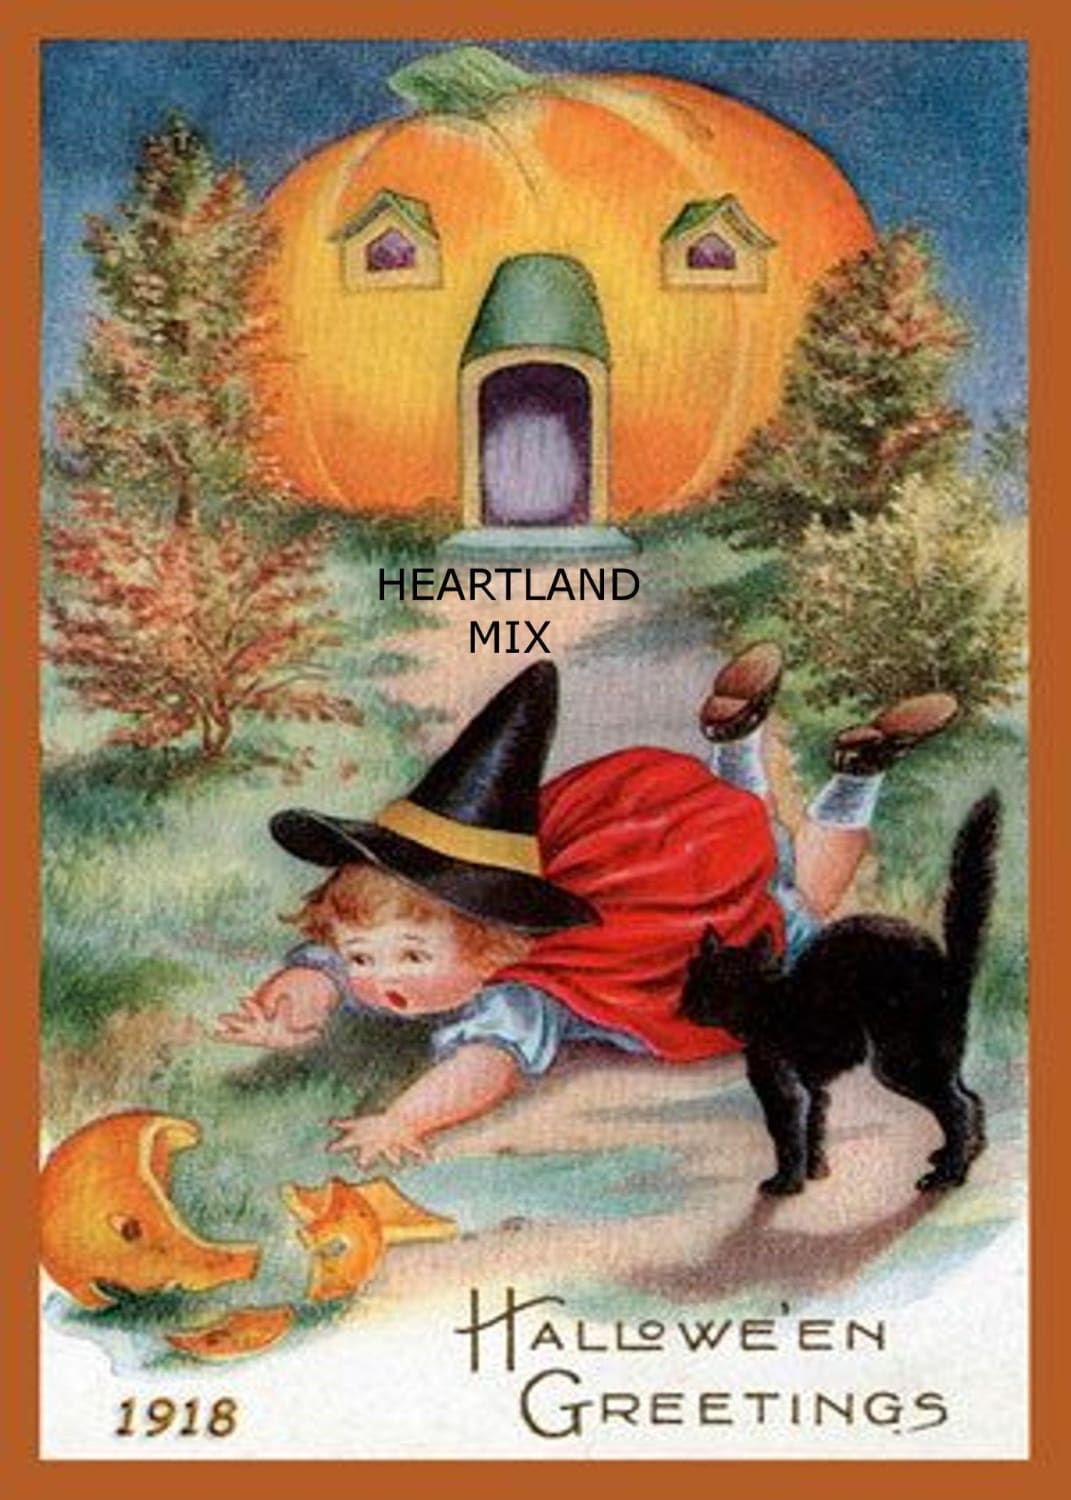 Vintage Halloween Pumpkin House Gift Tags/Cards/Wall Art Digital Image Instant Download Printable